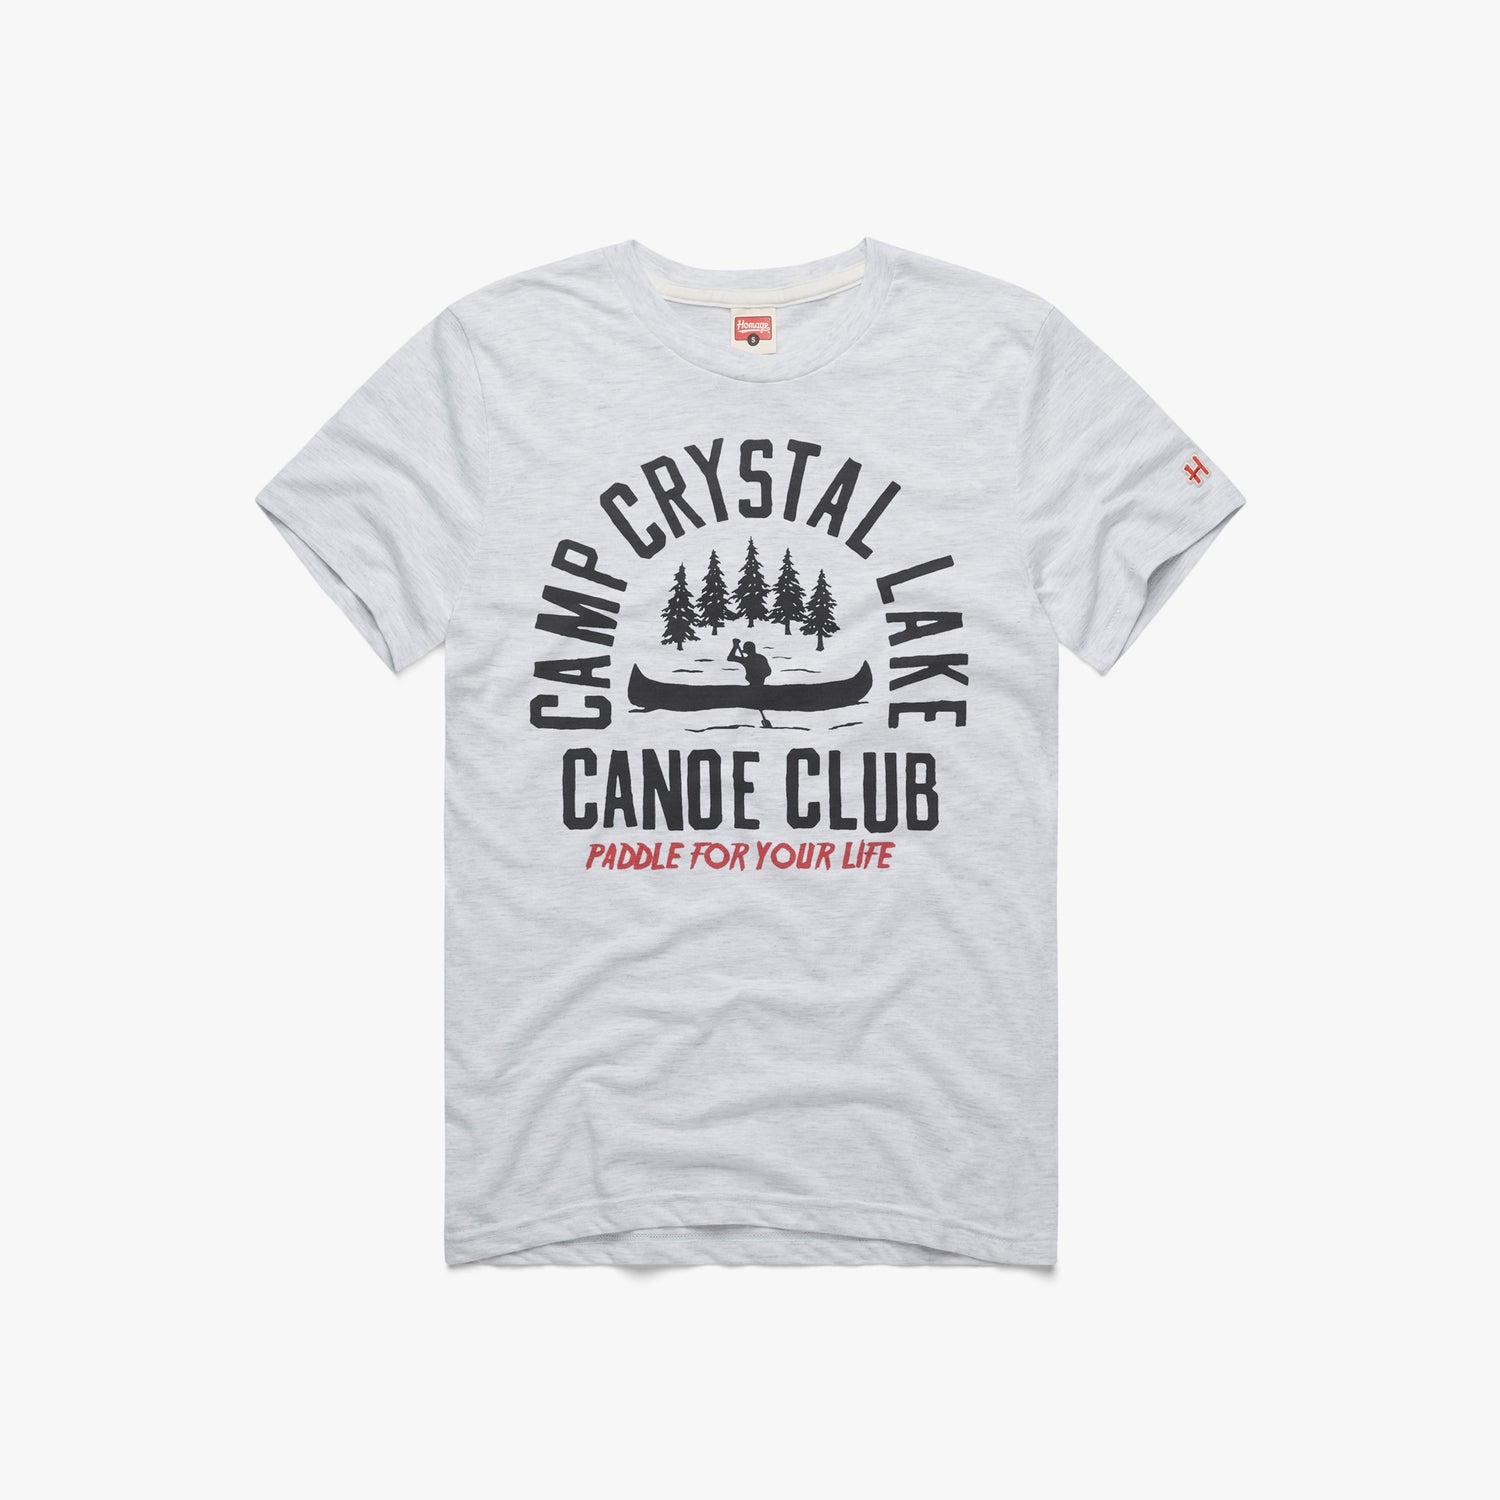 Camp Crystal Lake Canoe Club